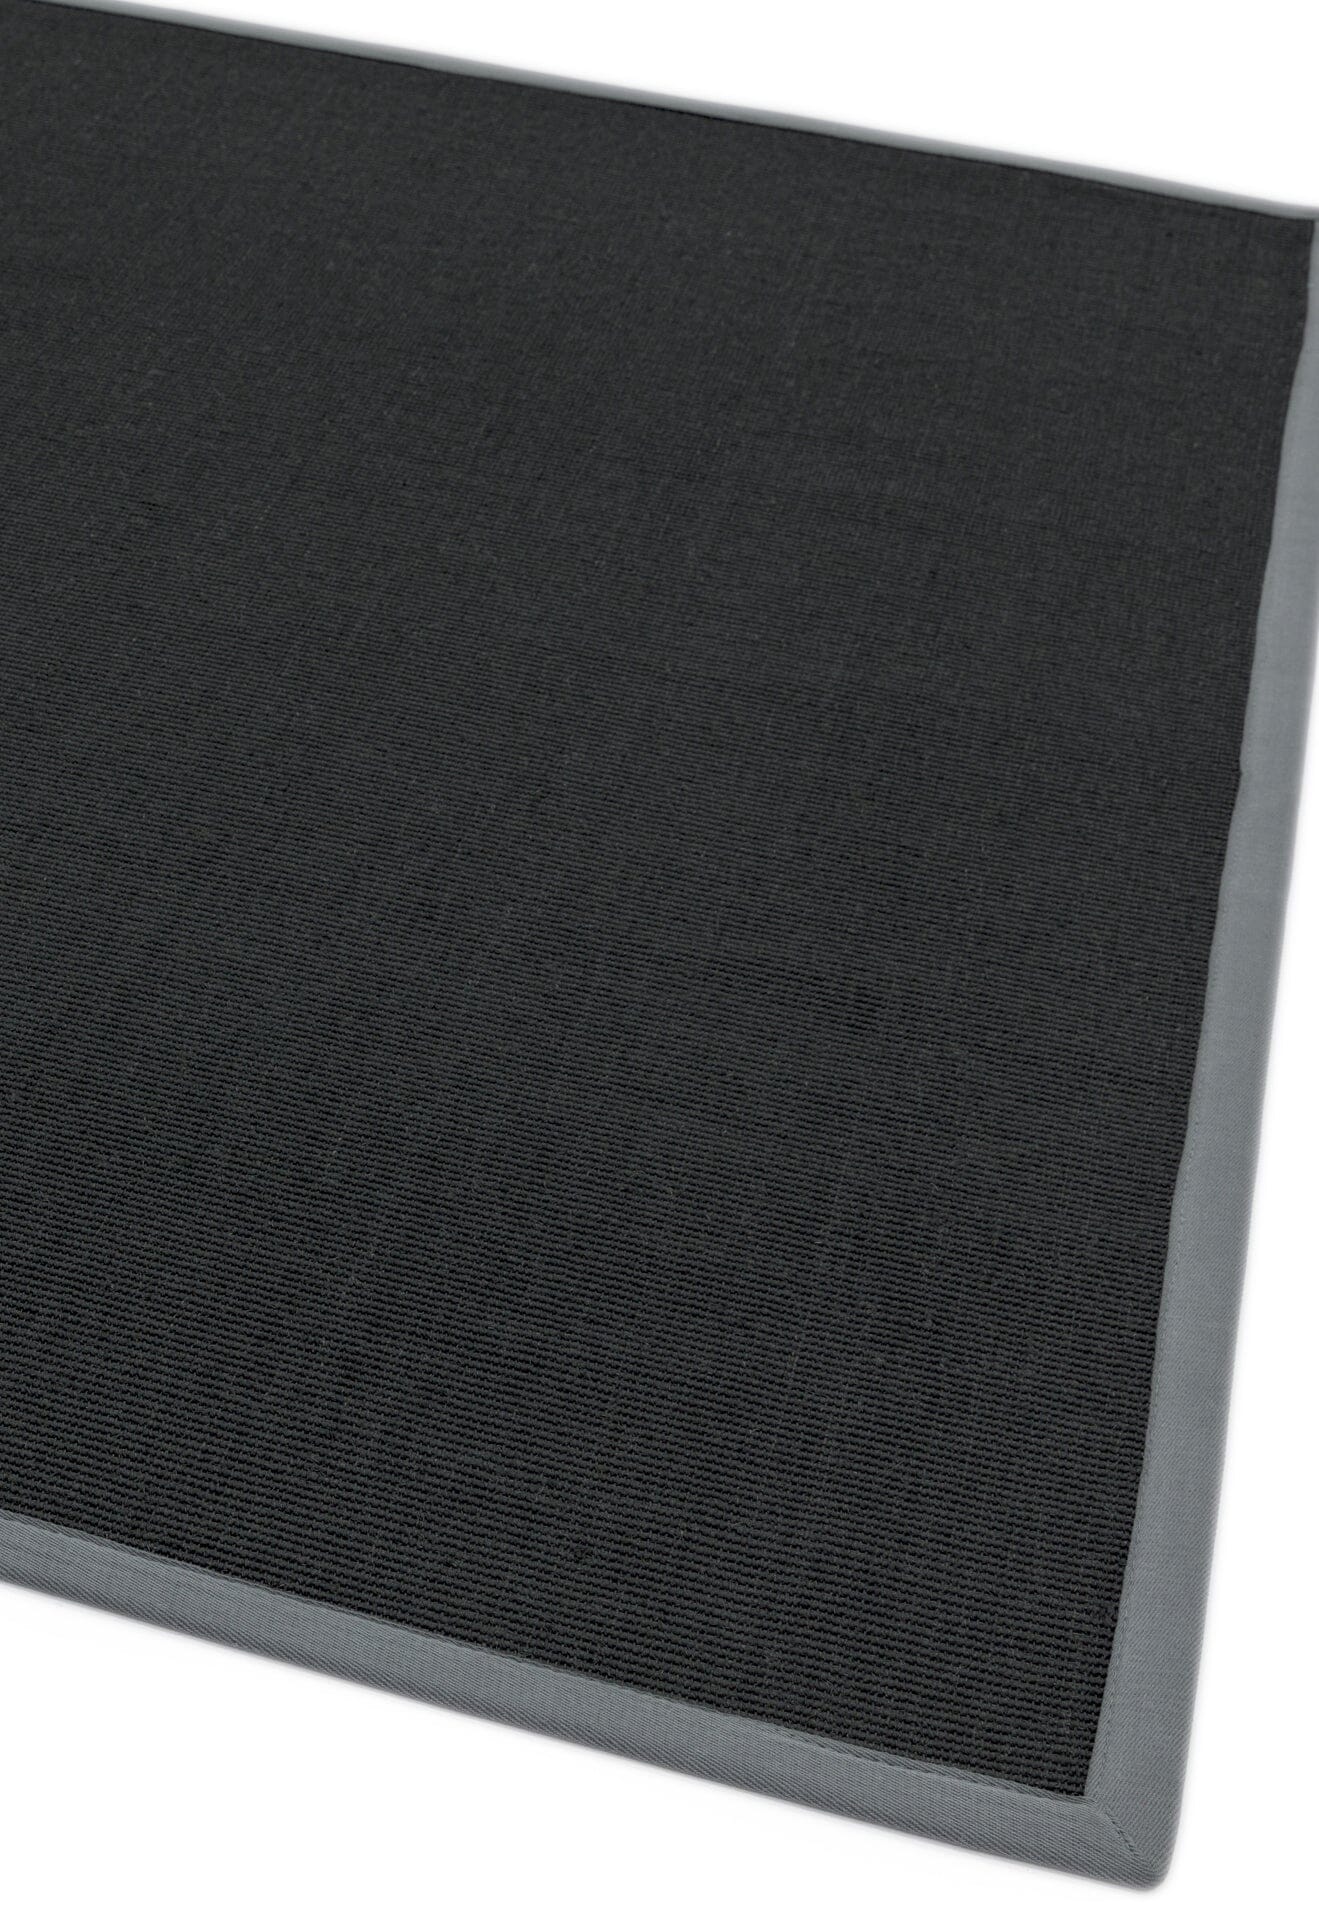  Asiatic Carpets-Asiatic Carpets Sisal Machine Woven Rug Black/Grey - 200 x 300cm-Black 149 